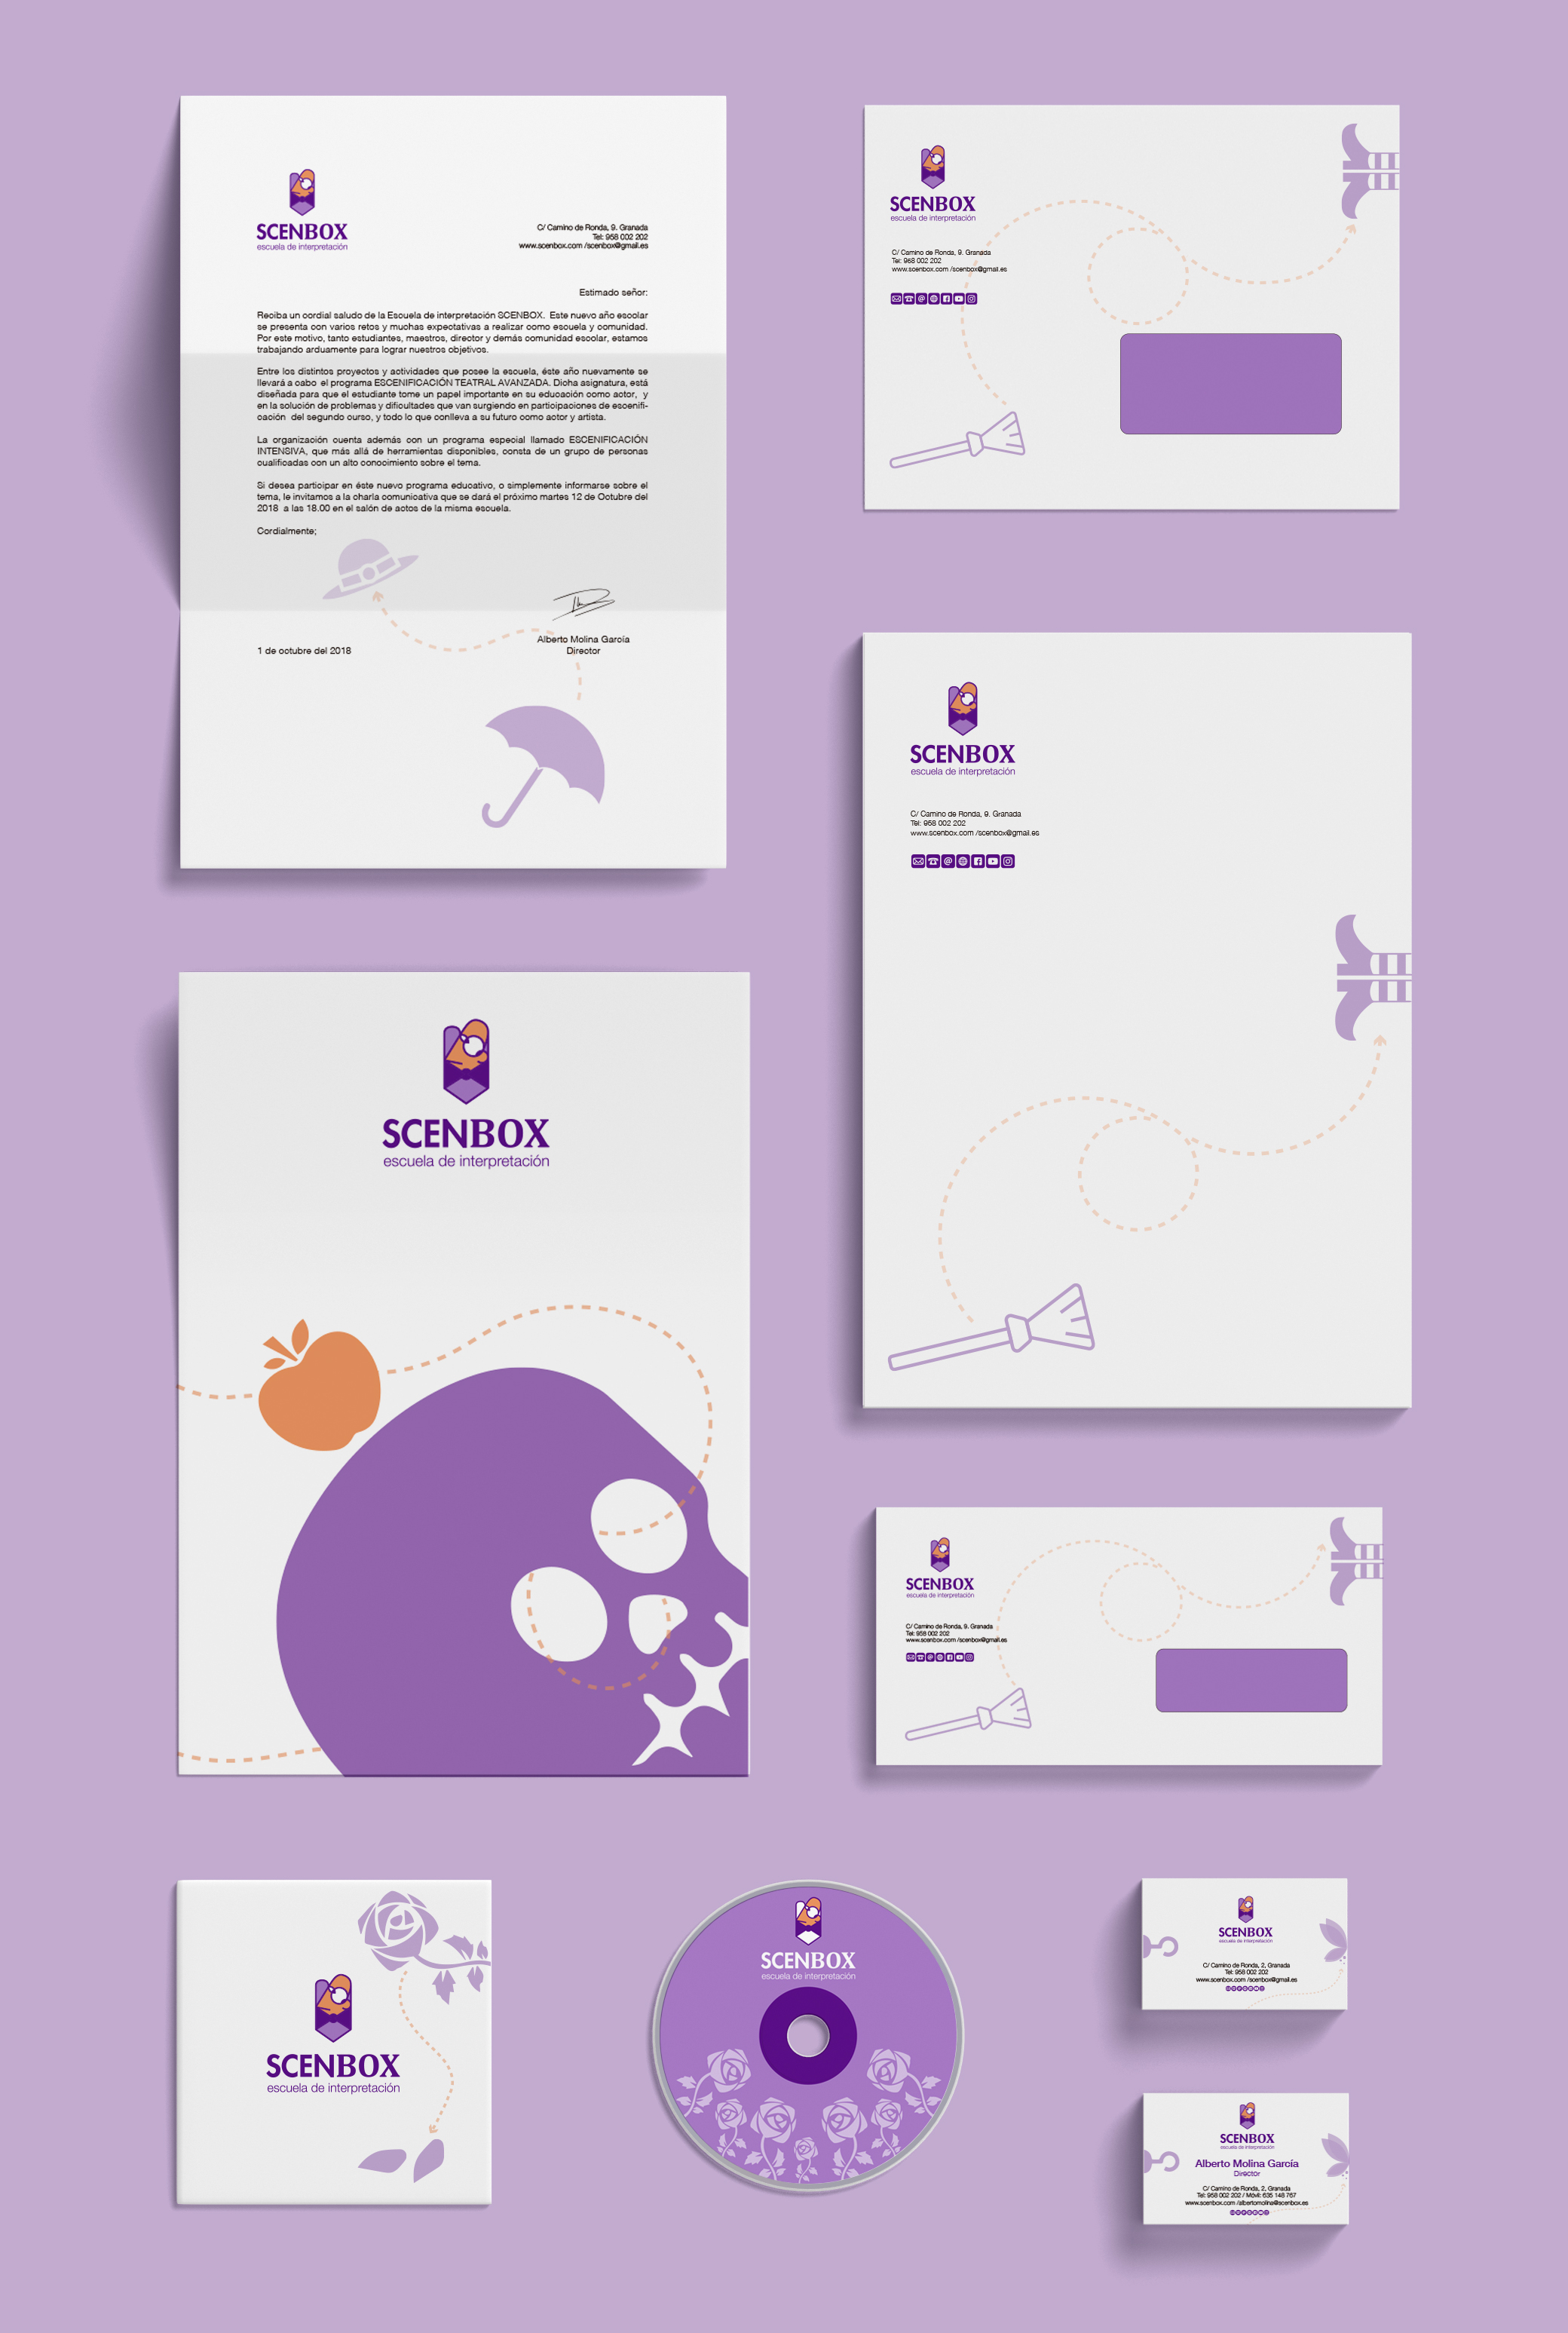 Identidad Corporativa SCENBOX by Alicia Romero Flores - Creative Work - $i